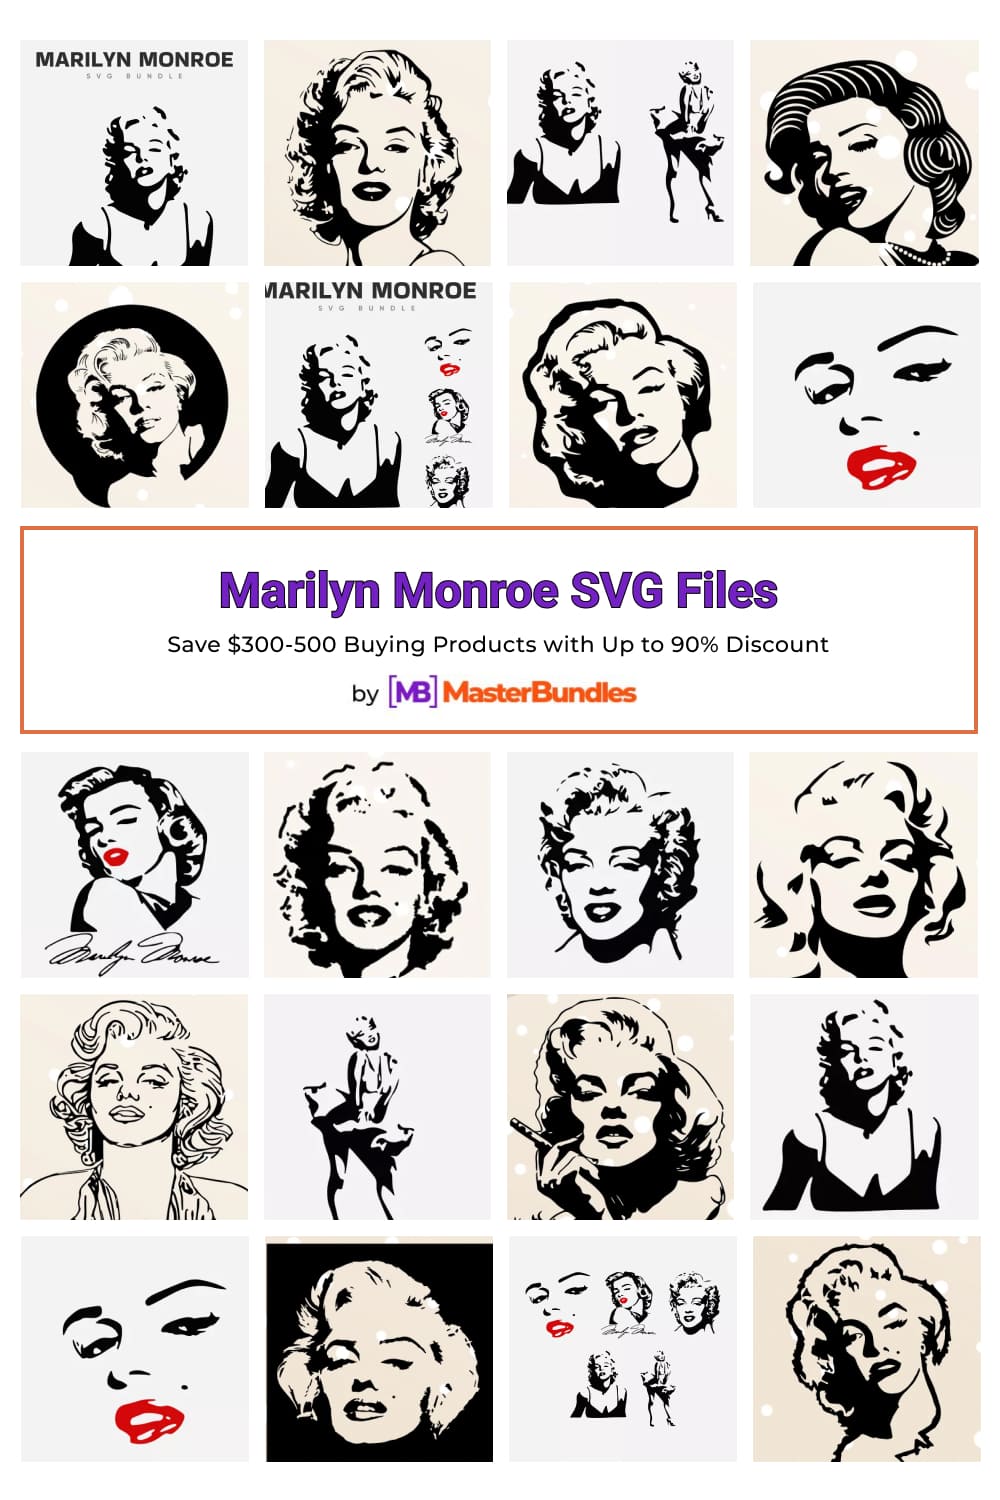 Marilyn Monroe SVG Files Pinterest image.